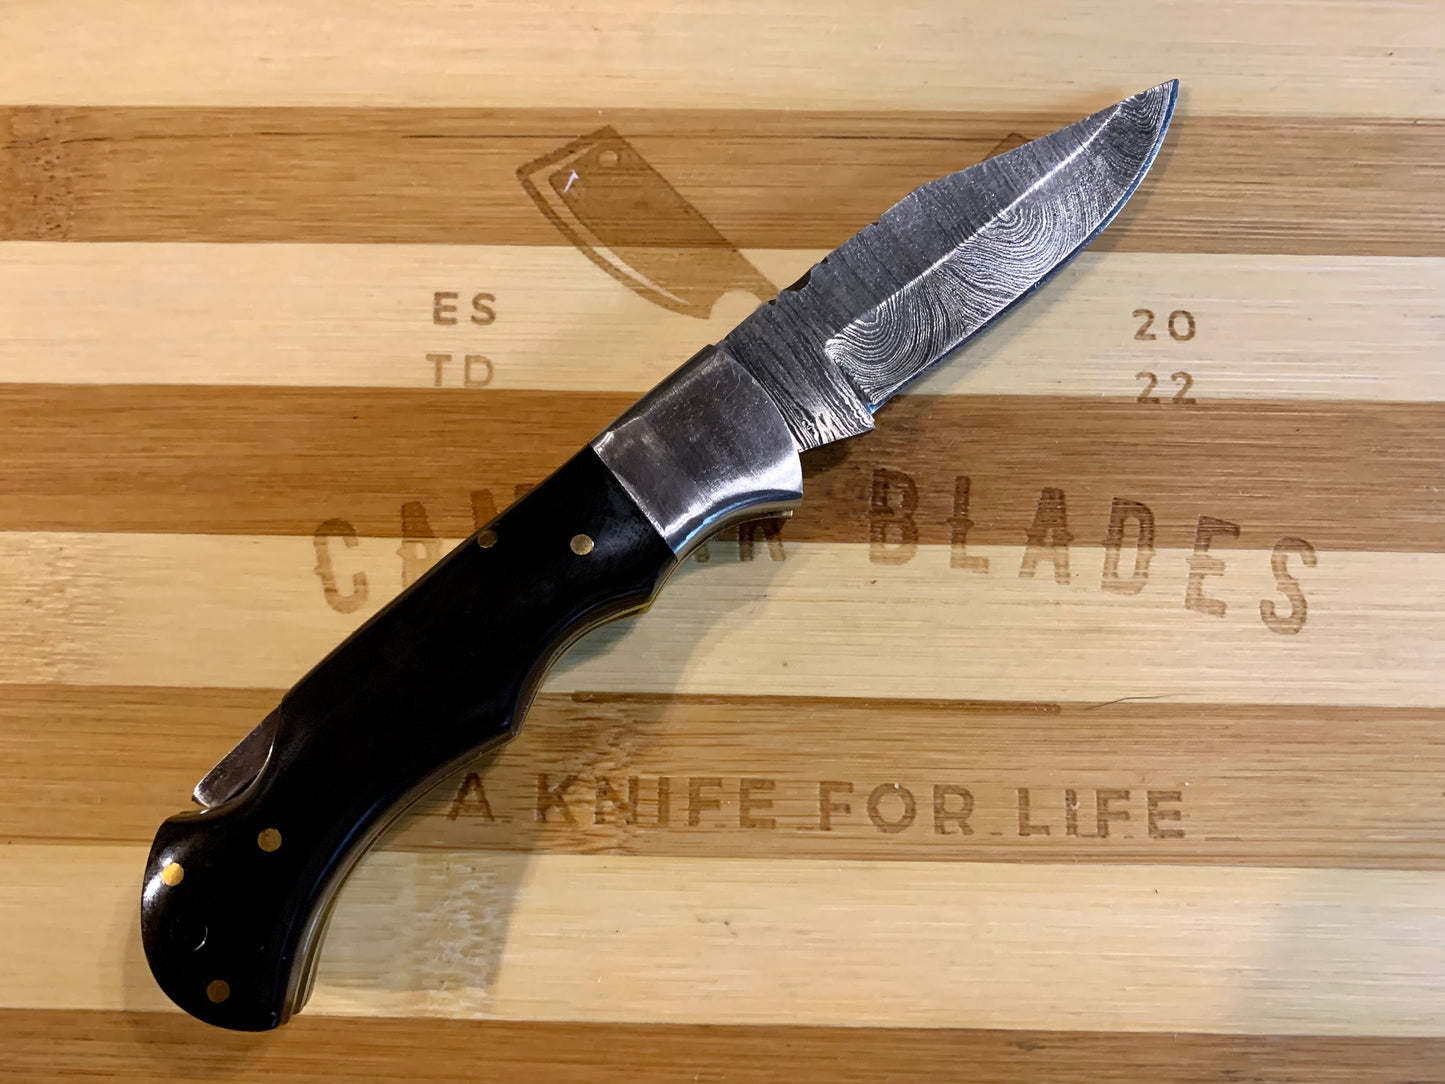 Damascus Steel Pocket Knife